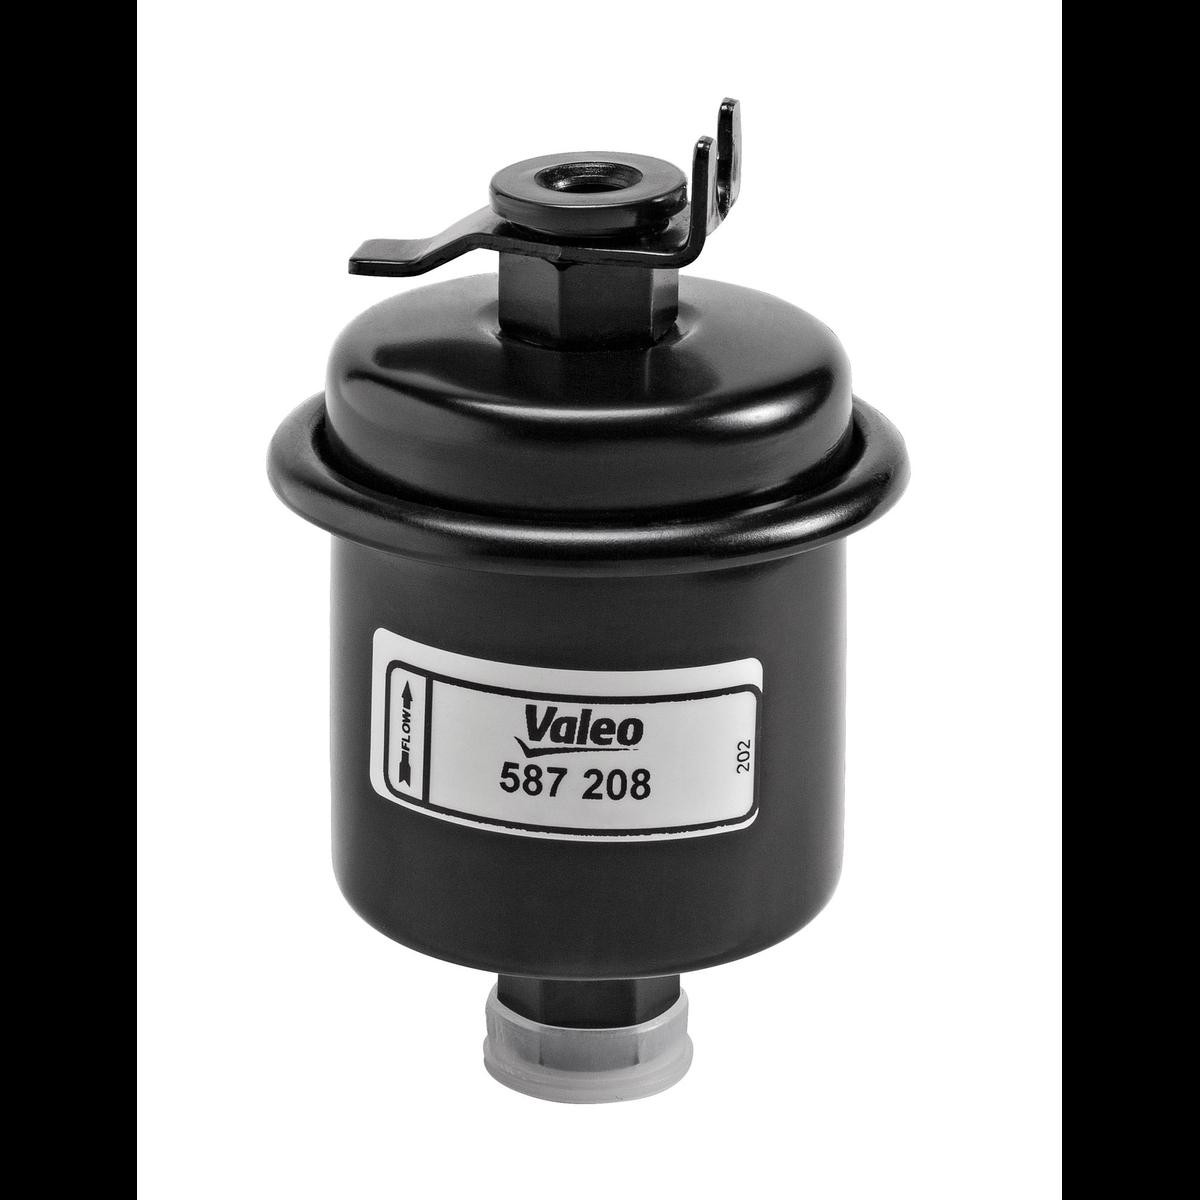 VALEO 587208 Fuel filter HONDA LOGO 1999 price